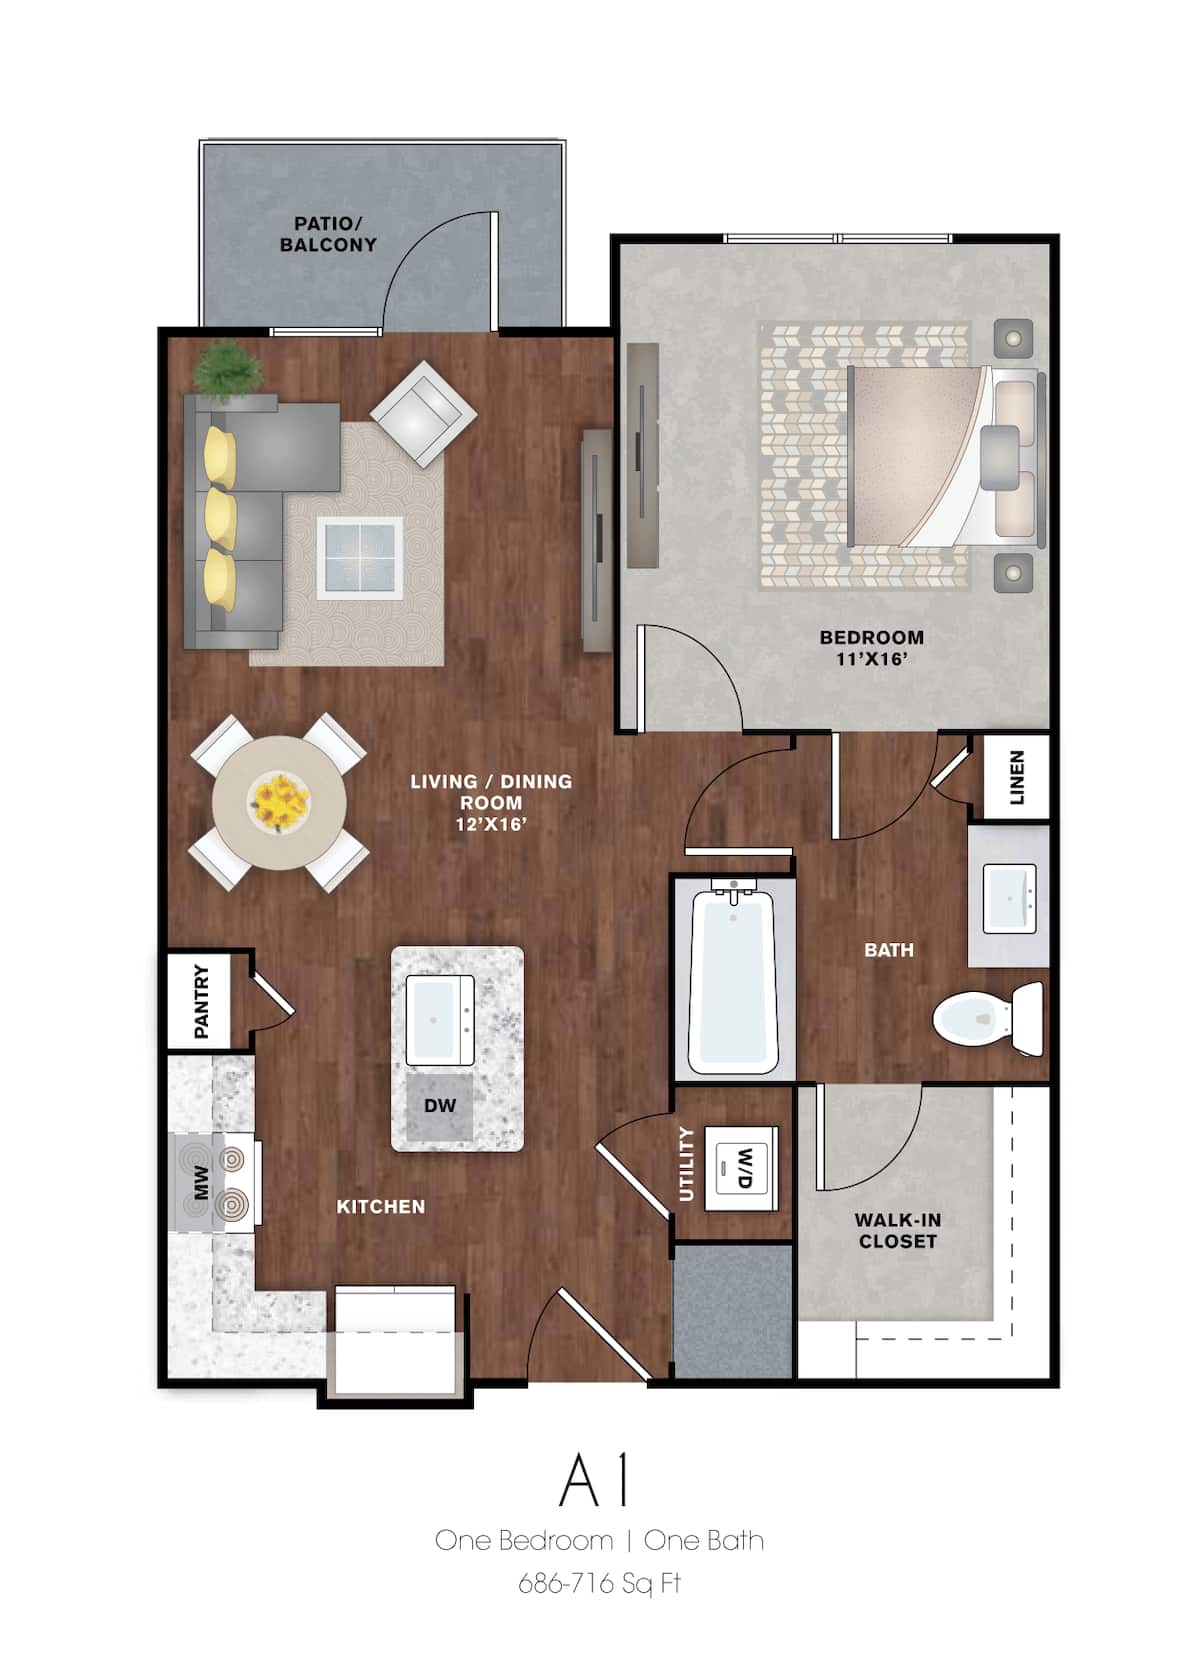 Floorplan diagram for A8, showing 1 bedroom